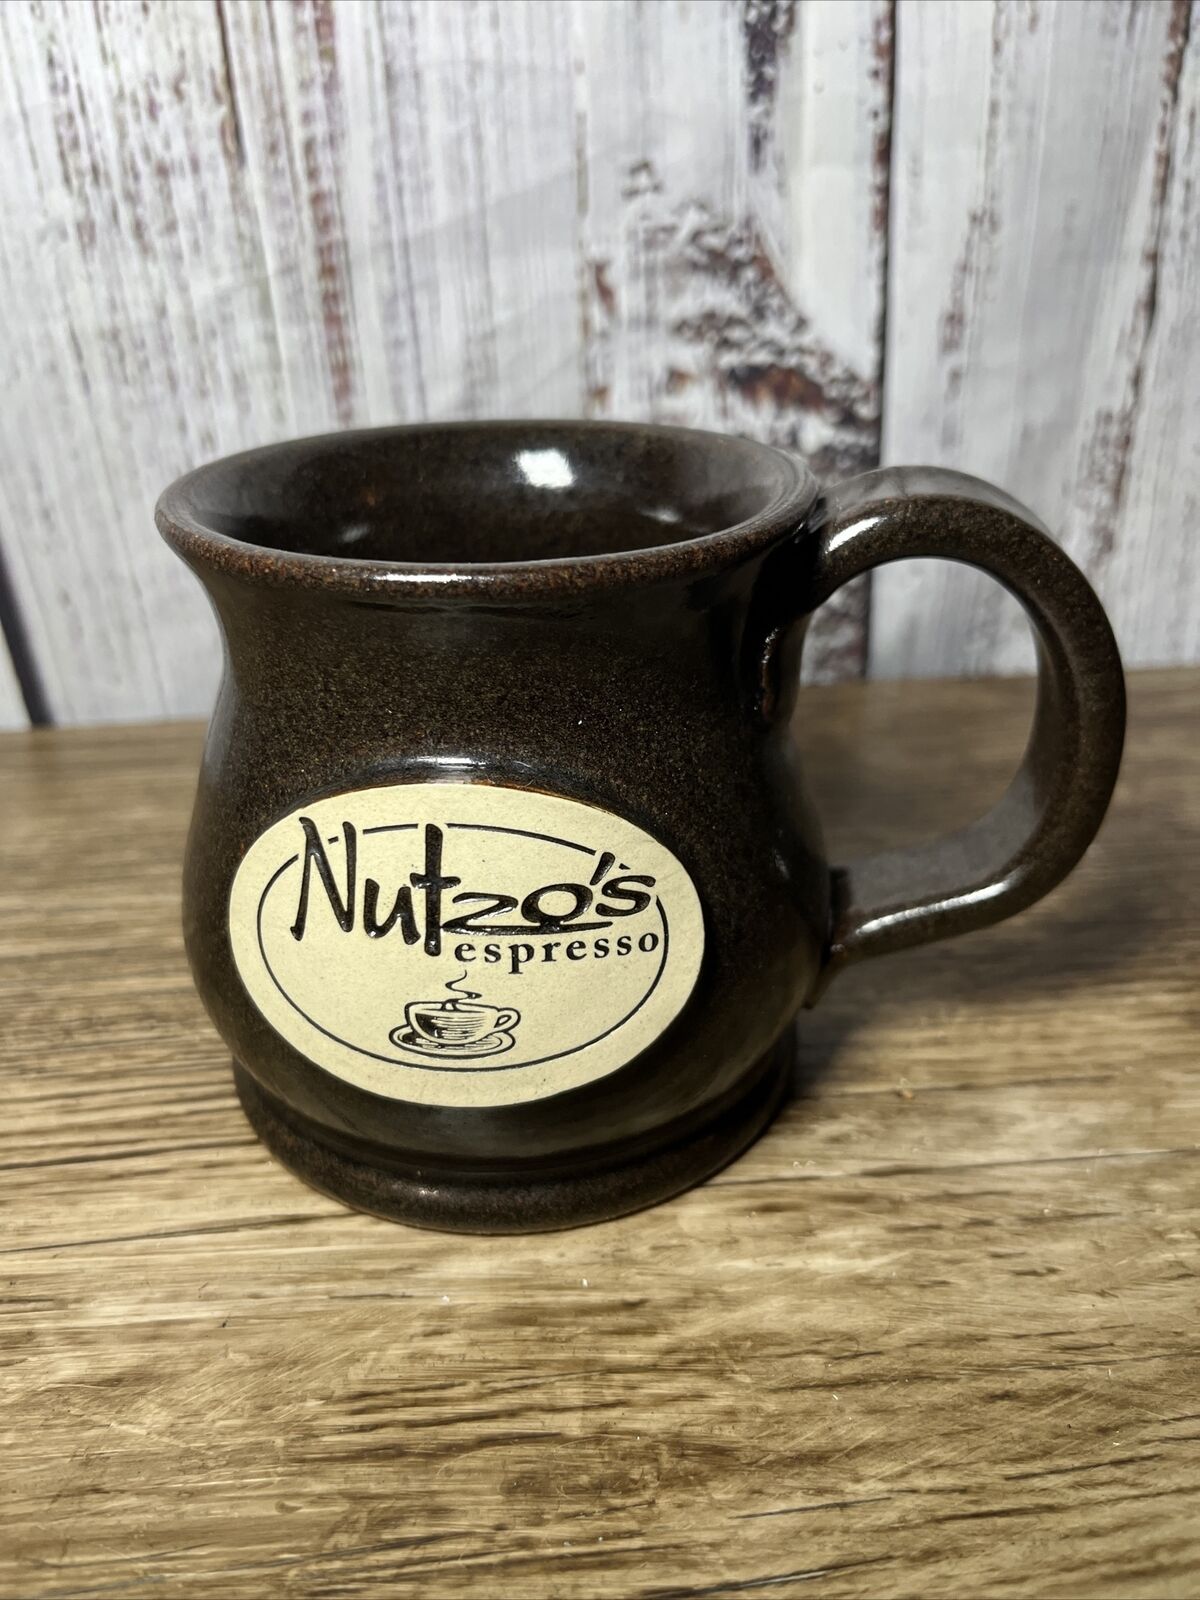 Sunset Hill Stoneware Nutzo's Espresso Coffee Mug Brown Made in USA